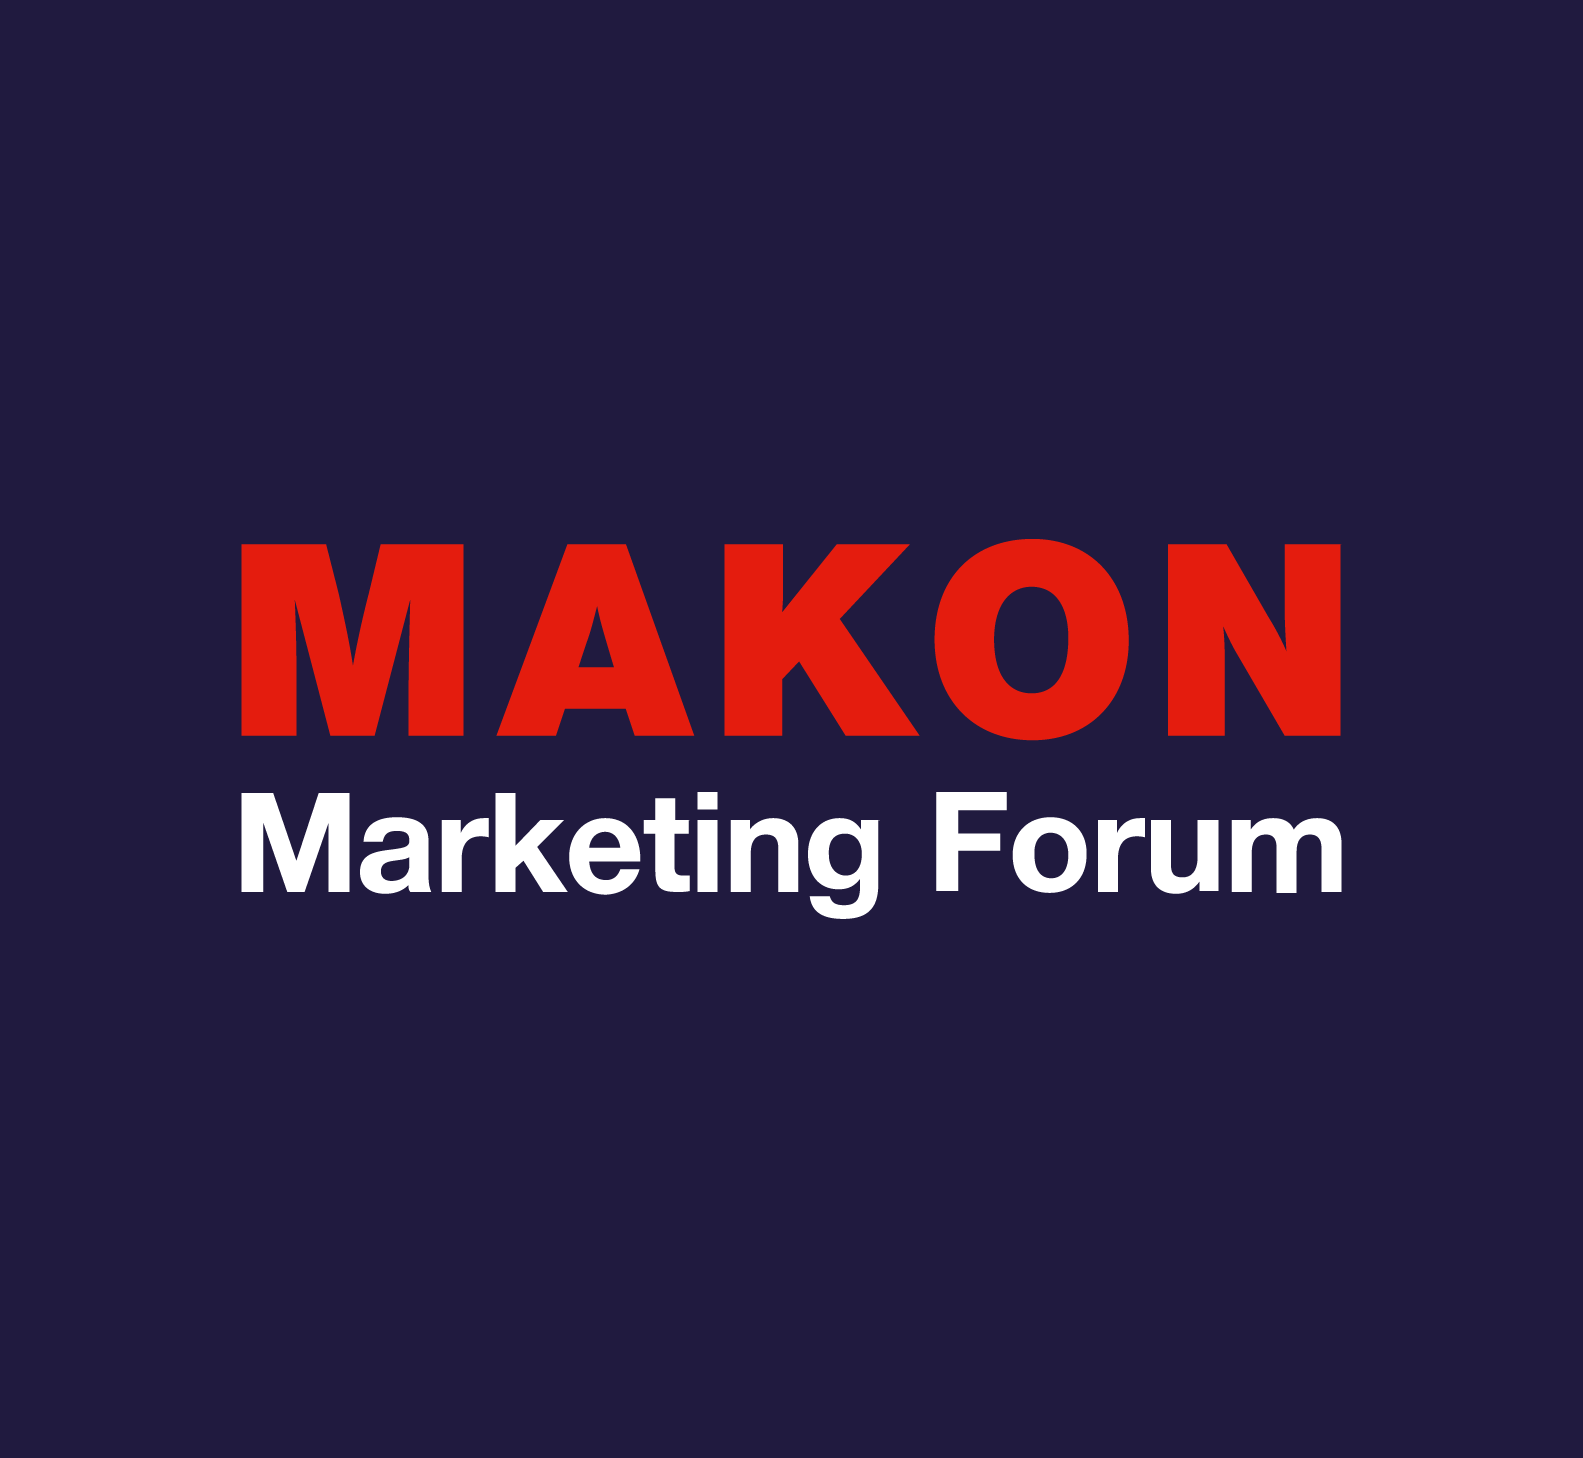 MAKON Marketing Forum